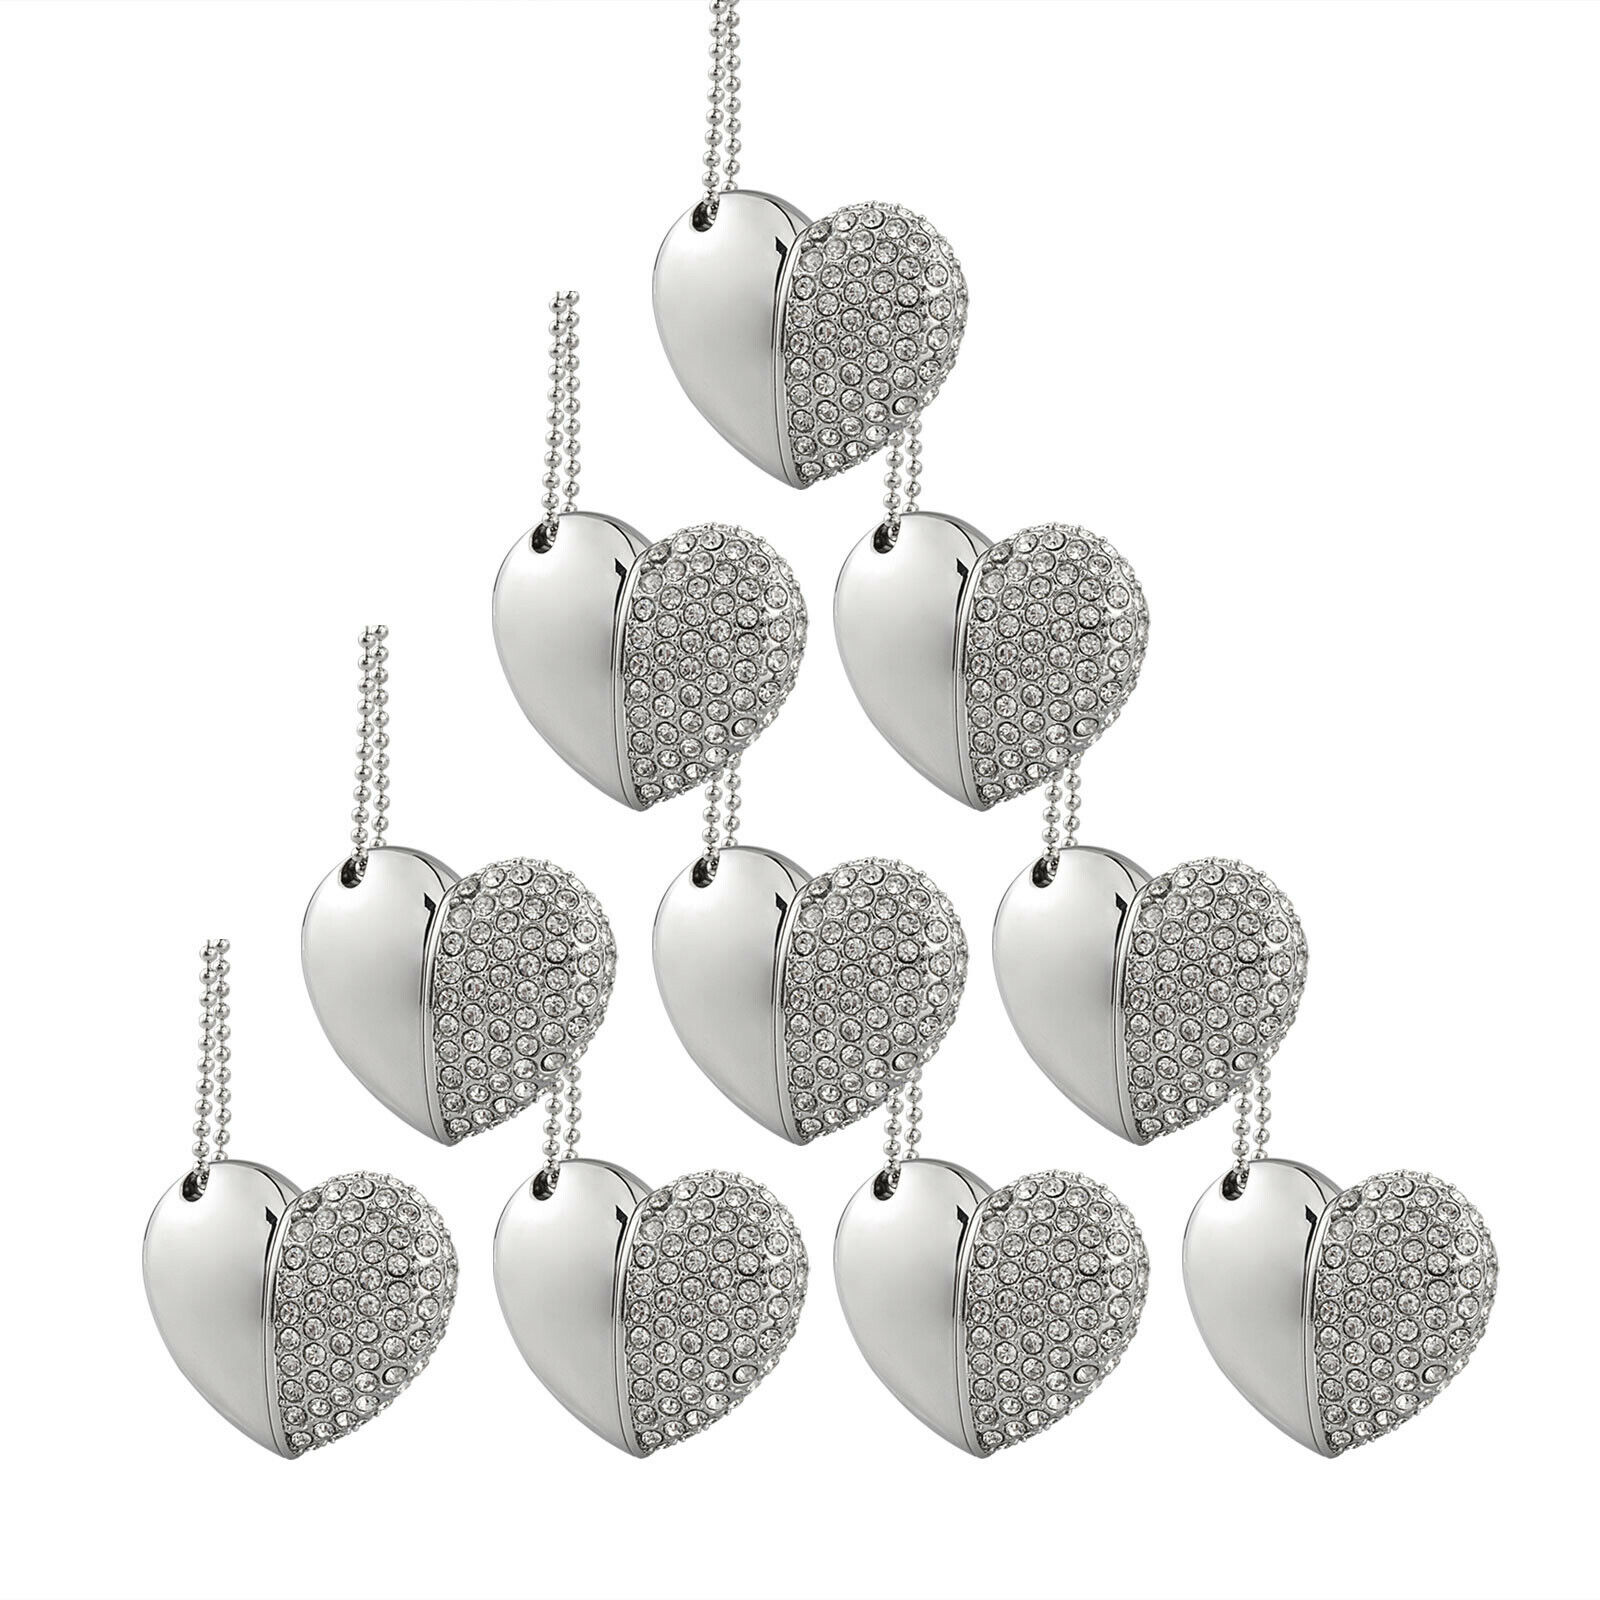 Kootion Diamond Crystal Heart Necklace Design 10 Pack USB 2.0 64GB Flash Drives